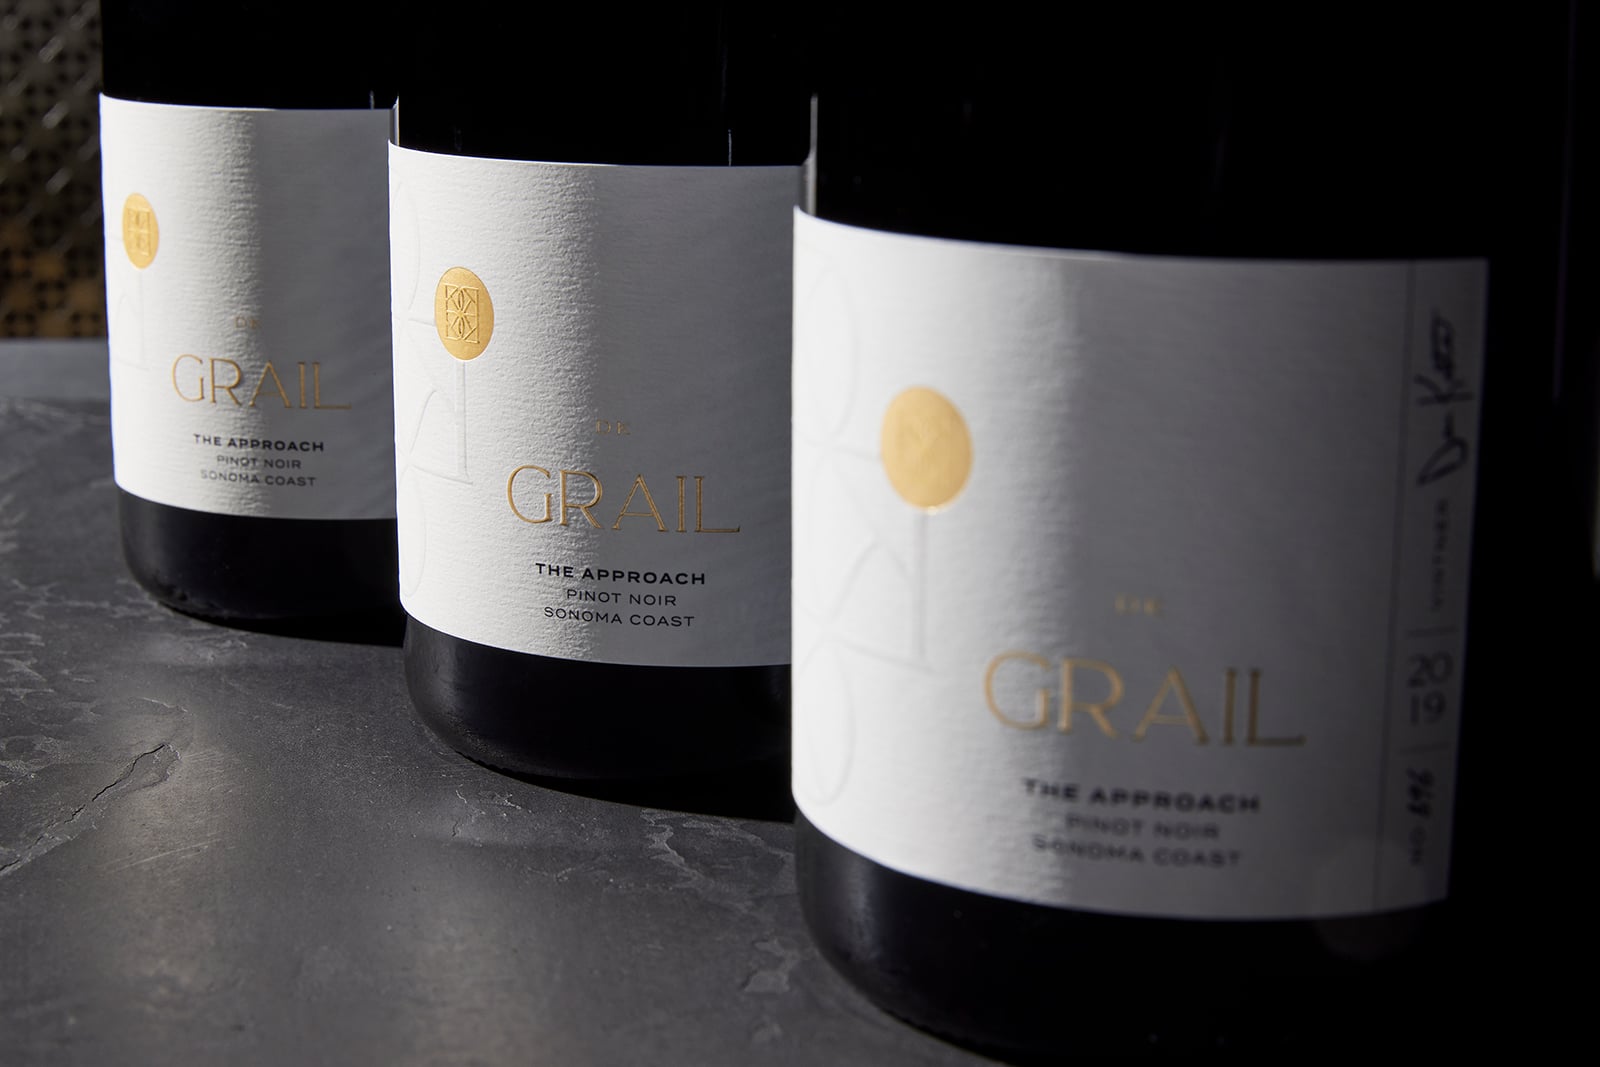 Three bottles of The Grail Pinot Noir